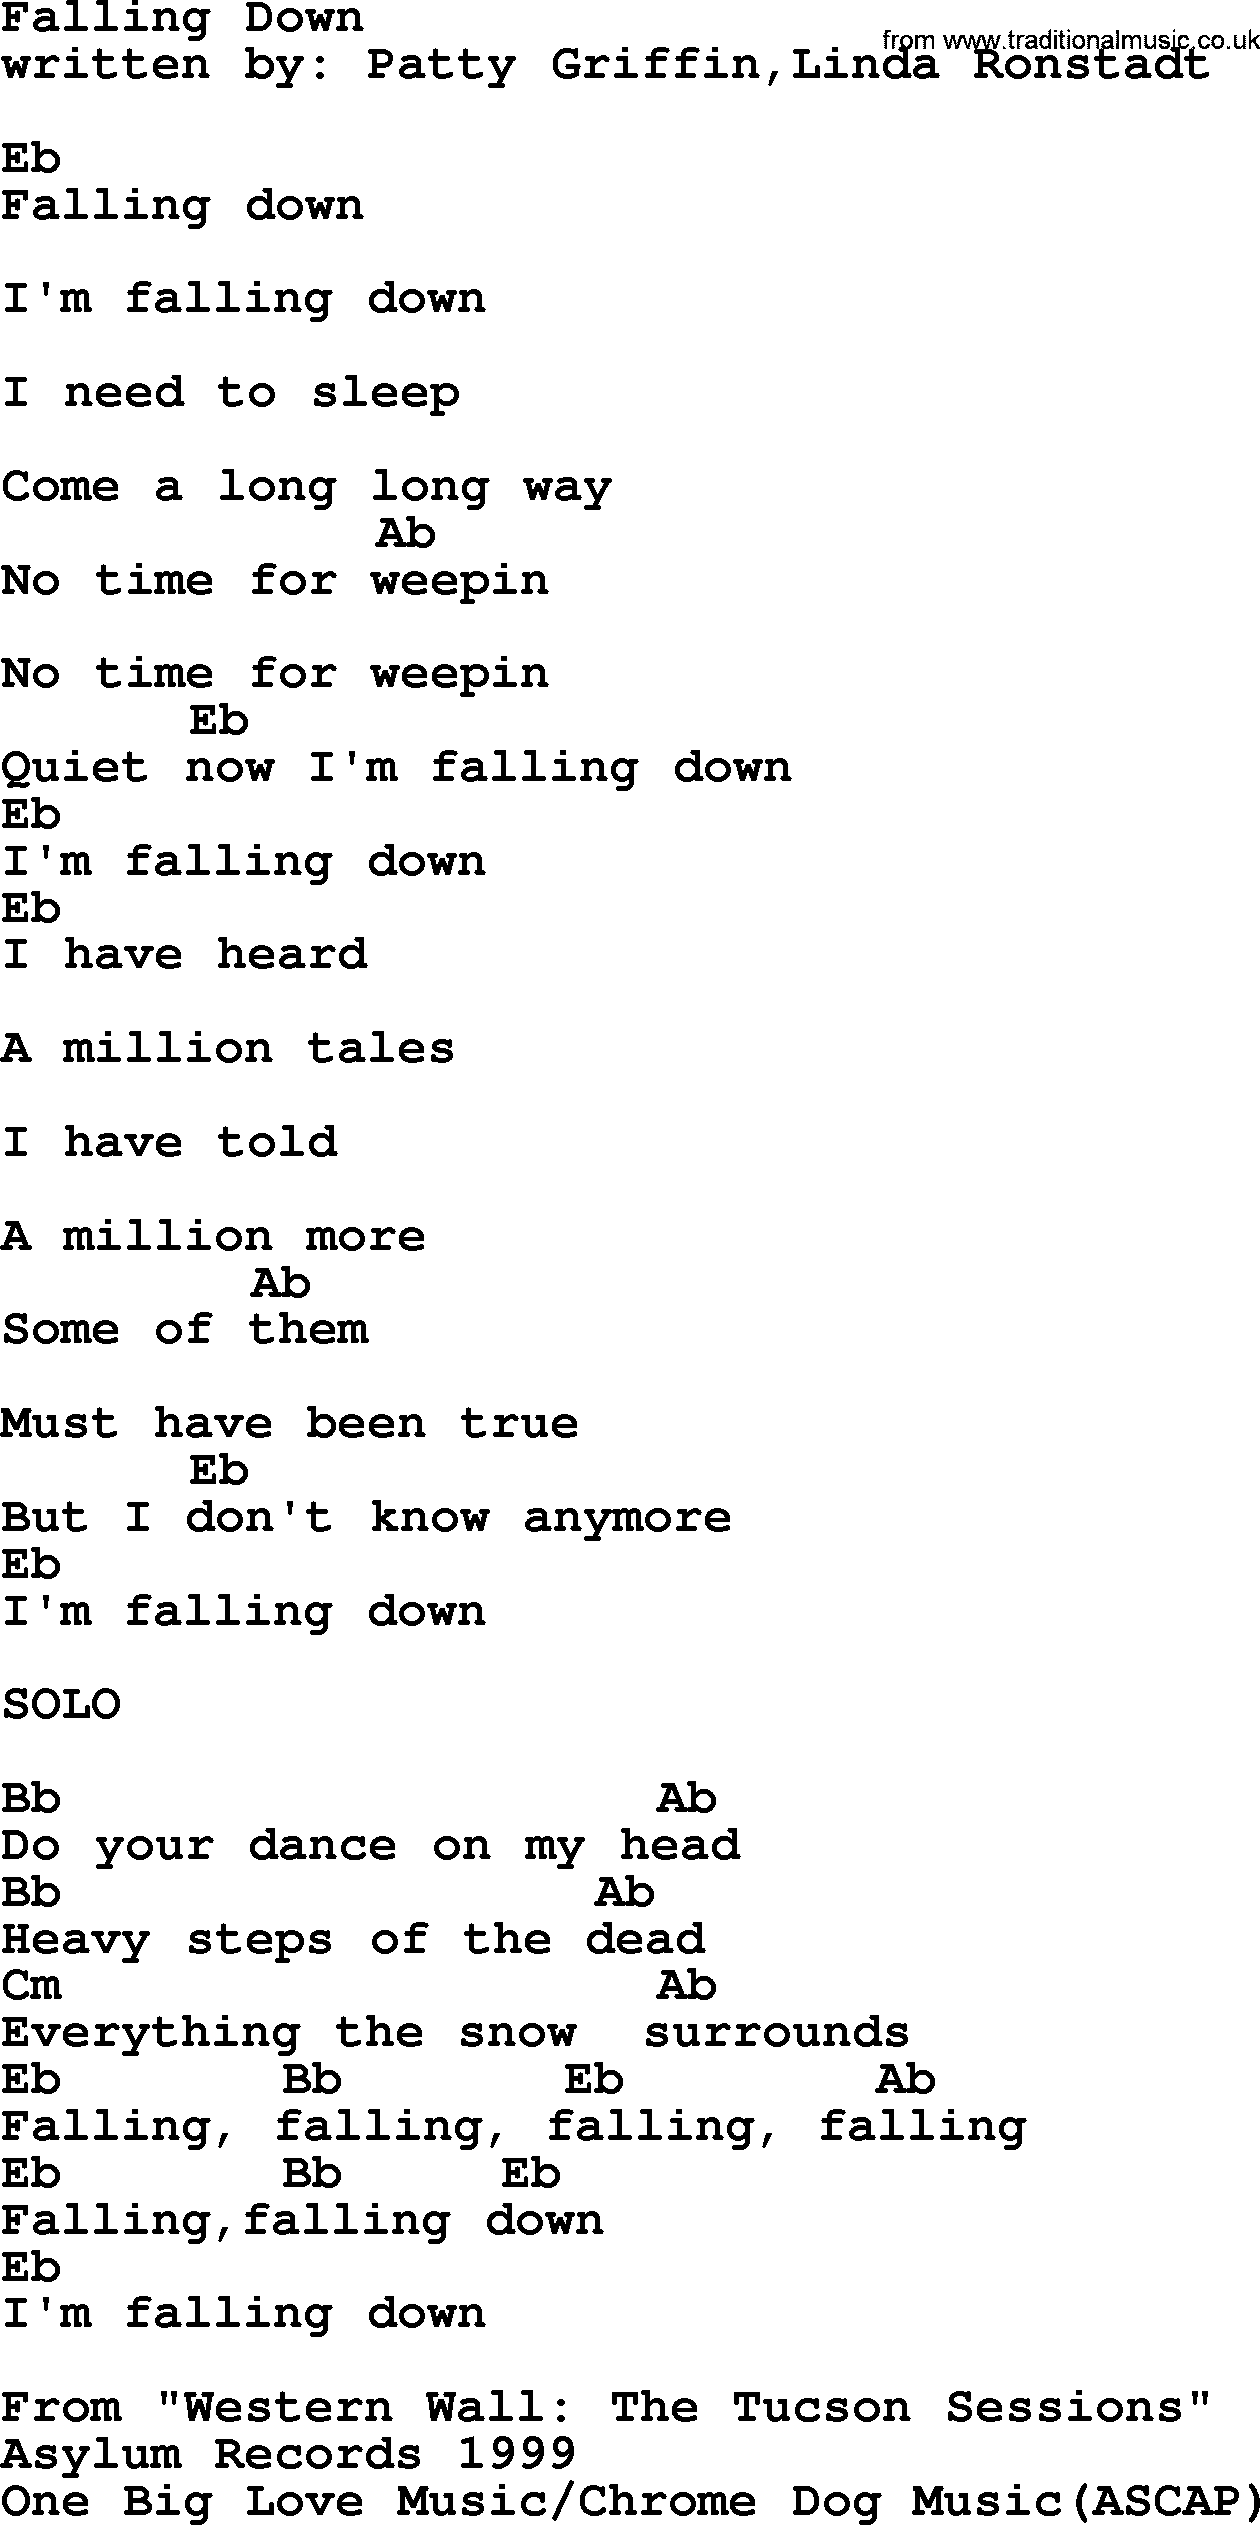 Emmylou Harris song: Falling Down lyrics and chords